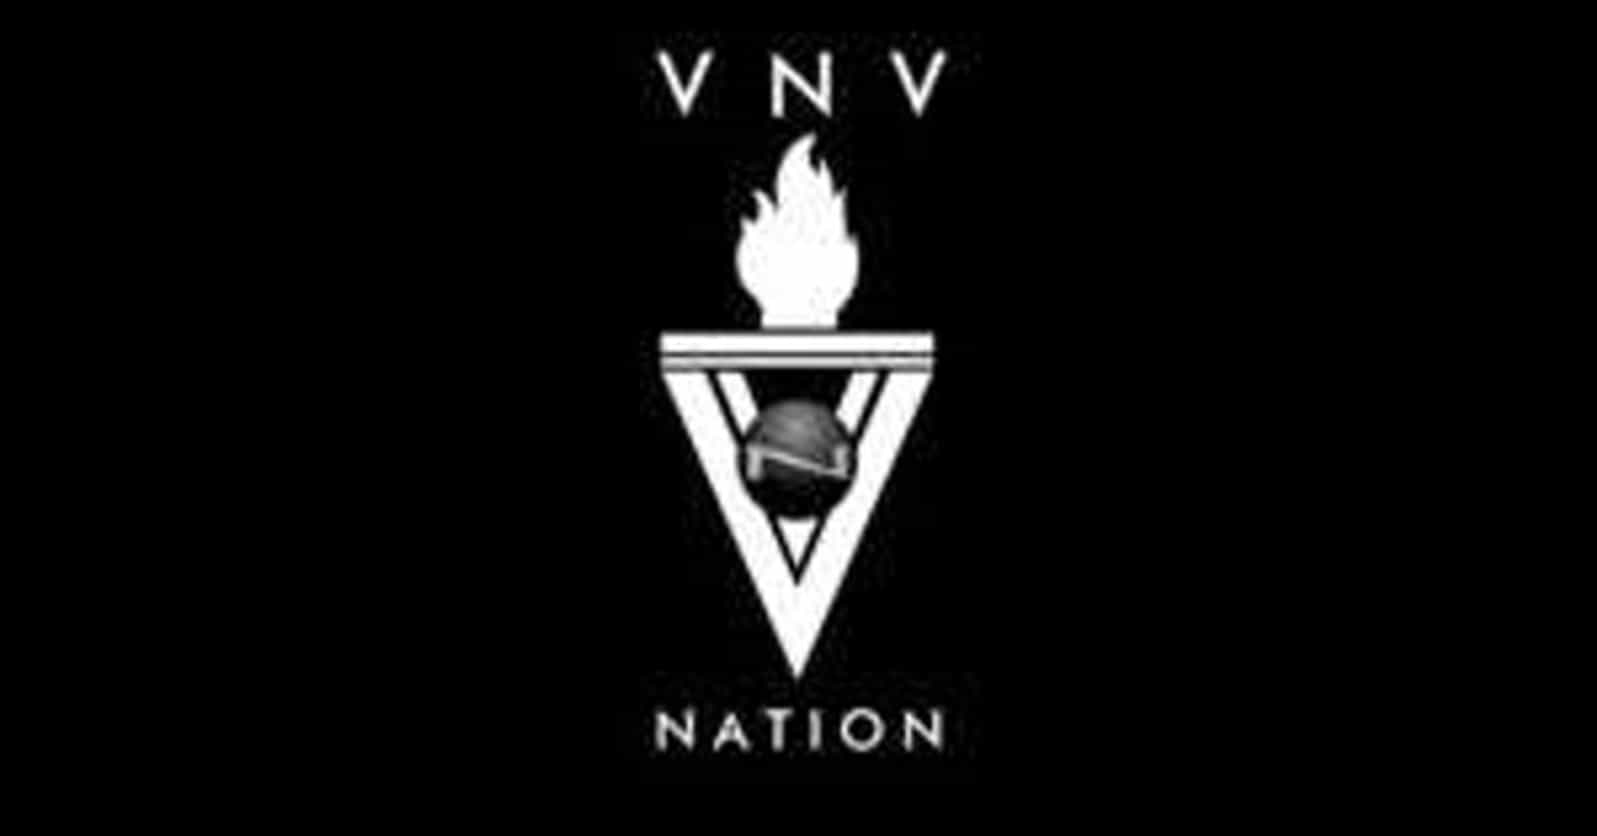 Best VNV Nation Songs